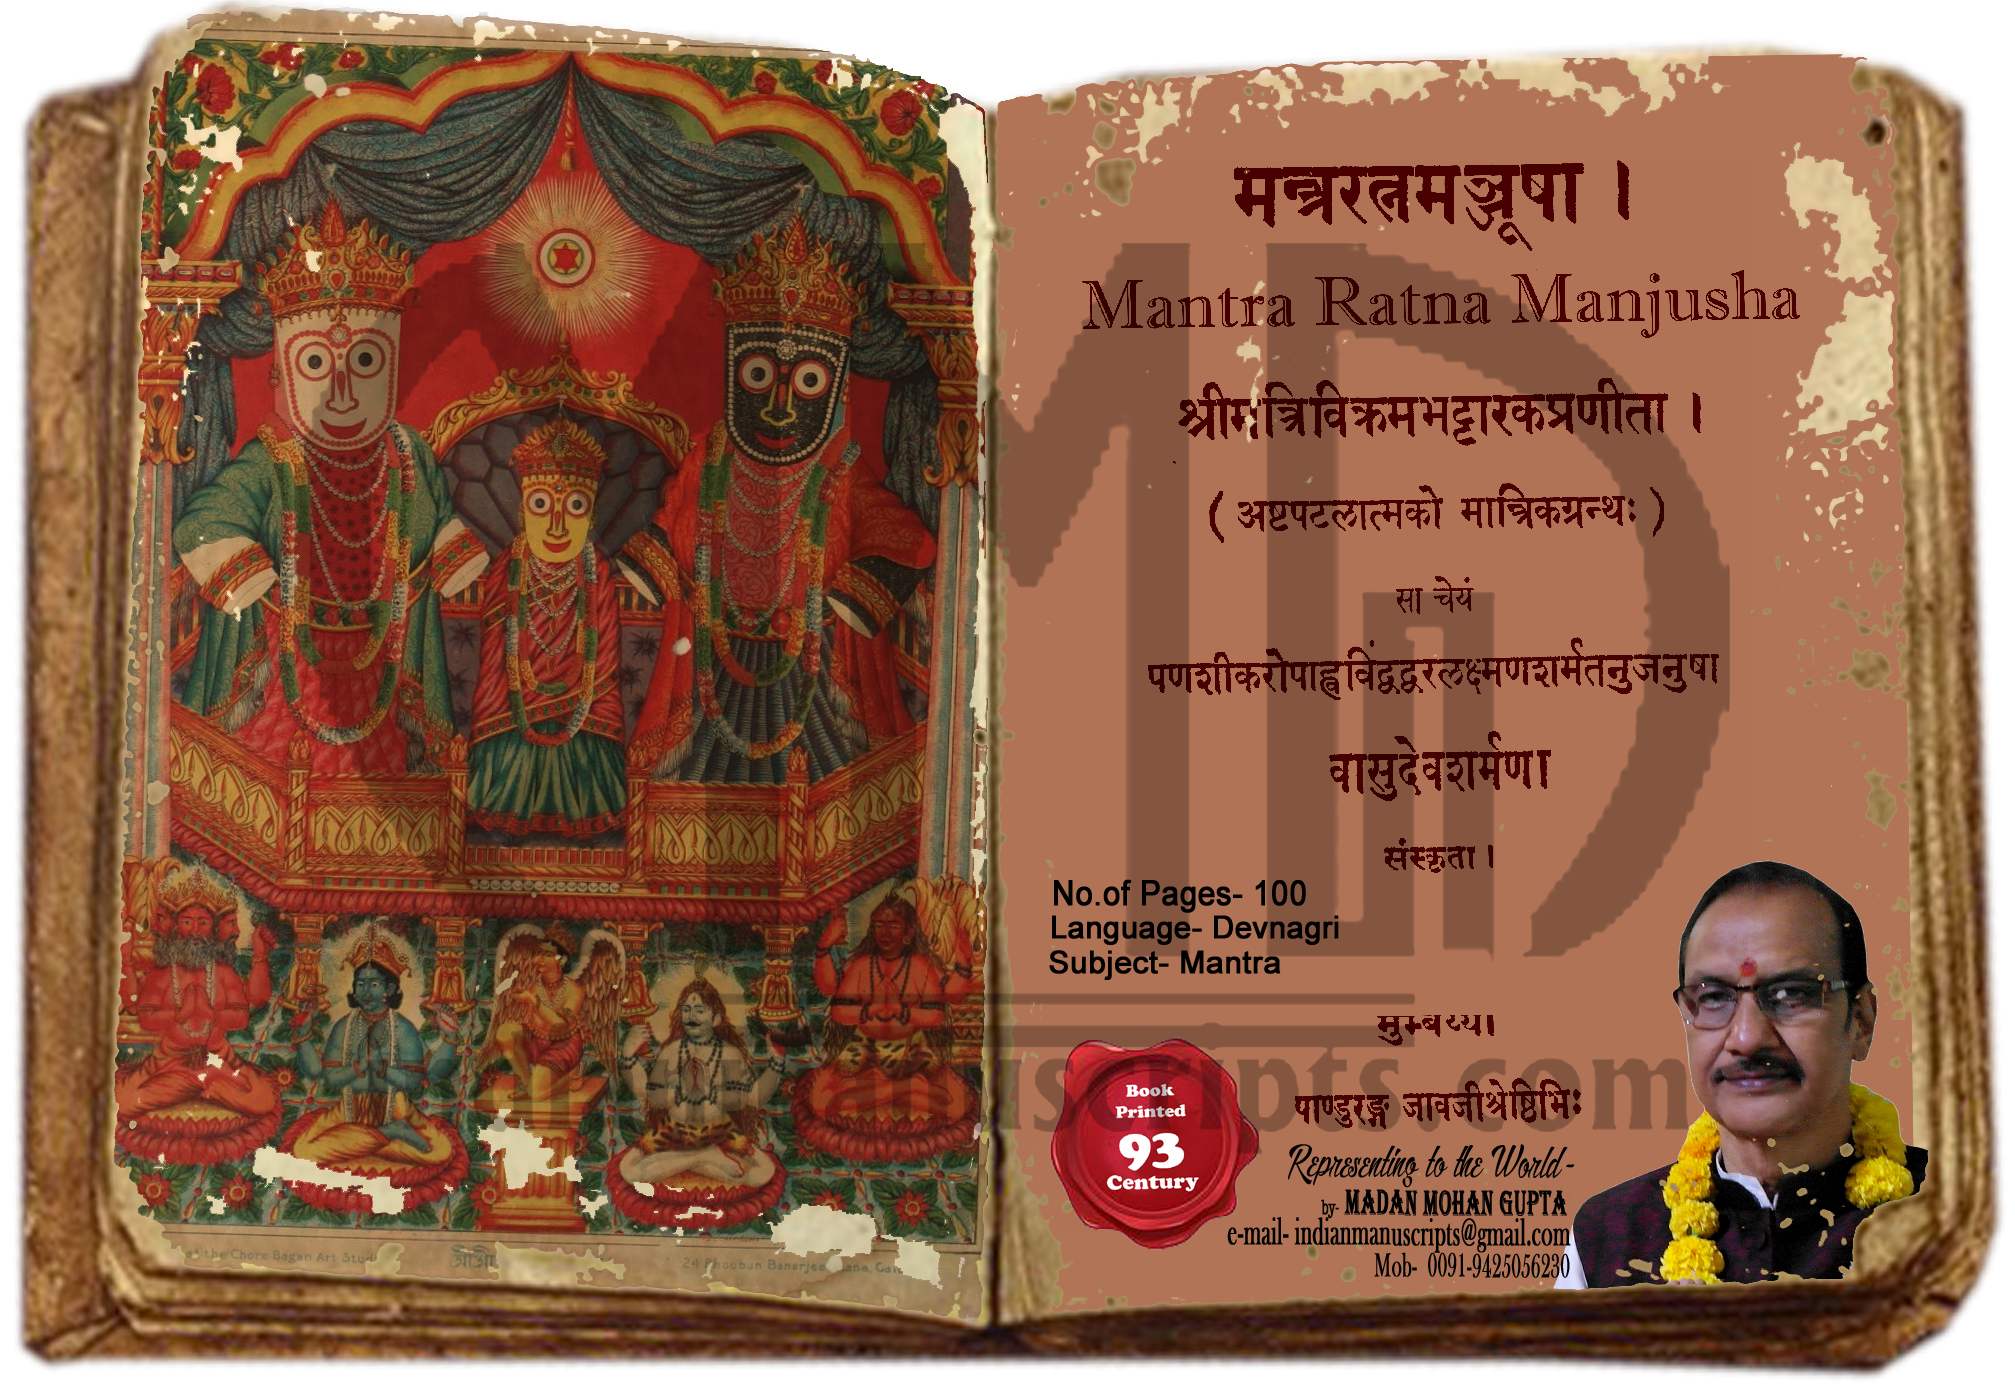 Mantra Ratna Manjusha